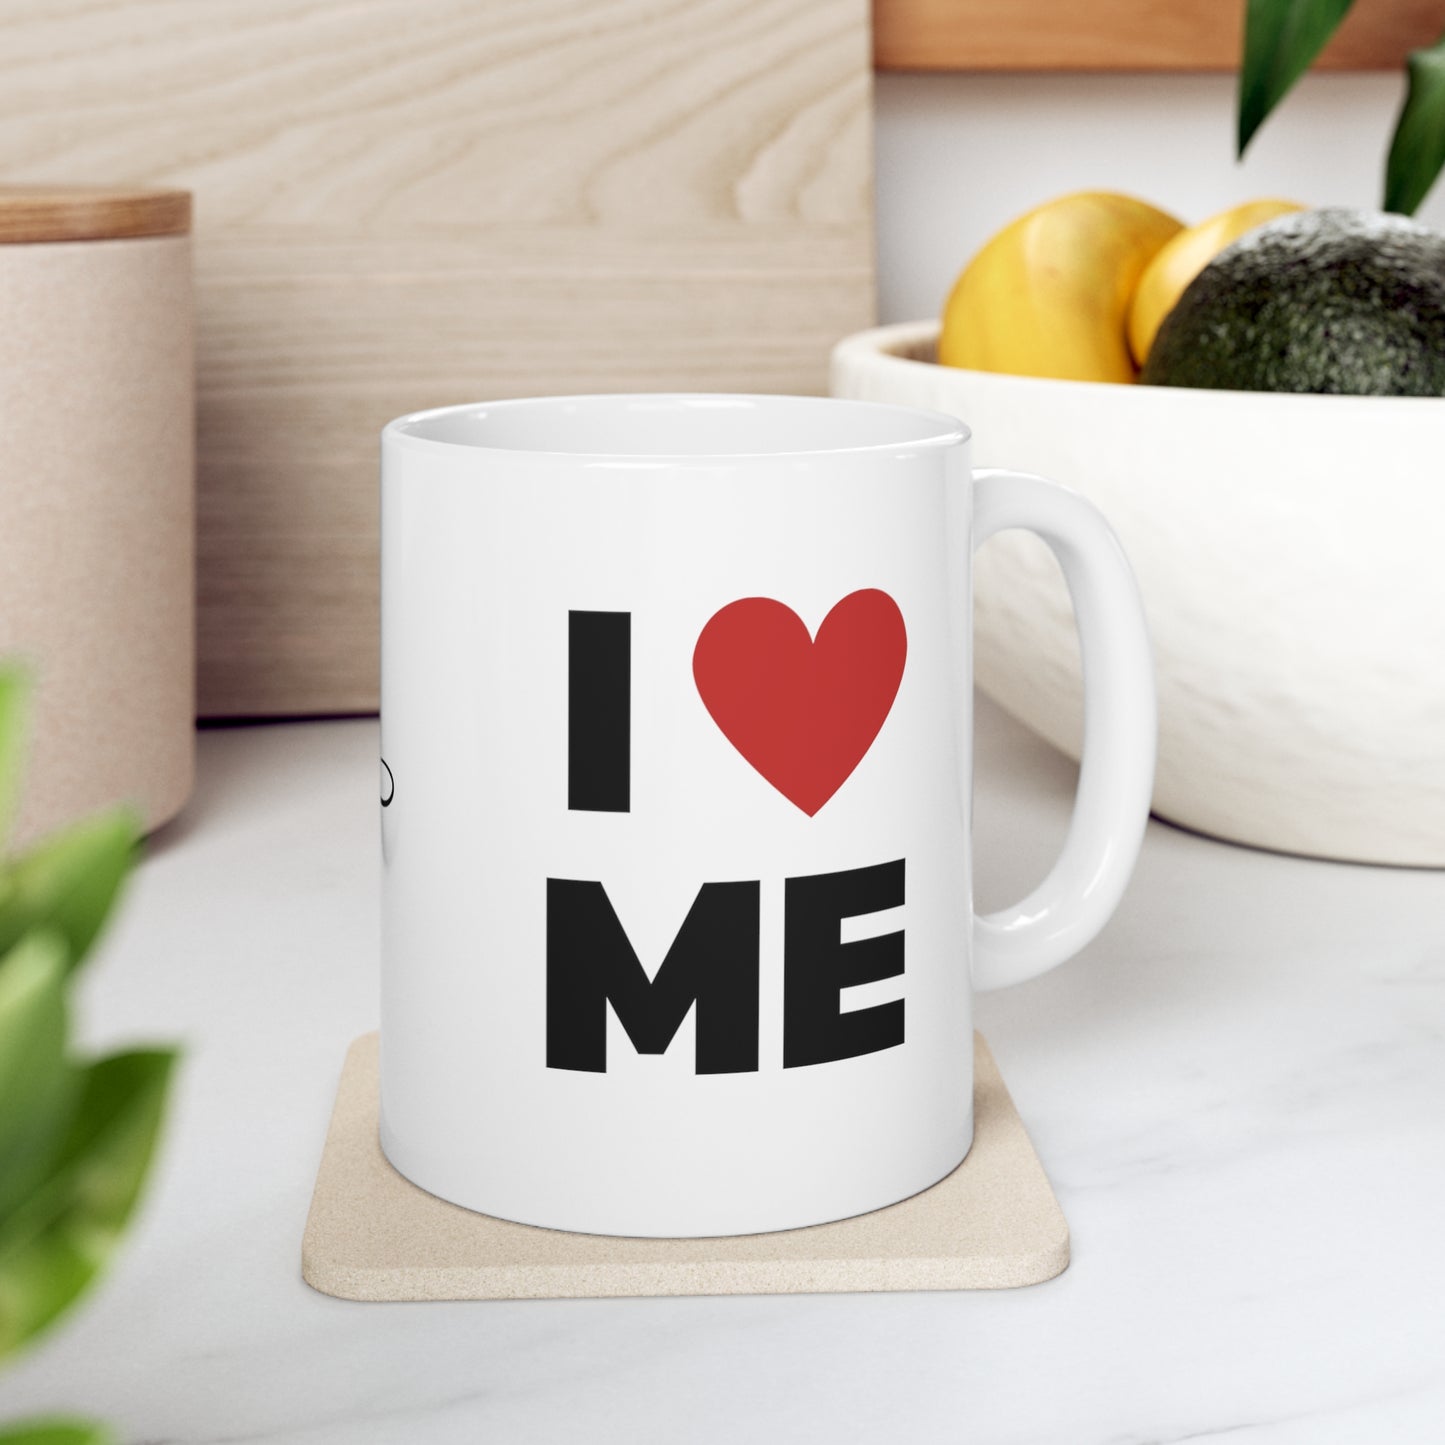 I Love Me/ You (Right) Mug 11oz